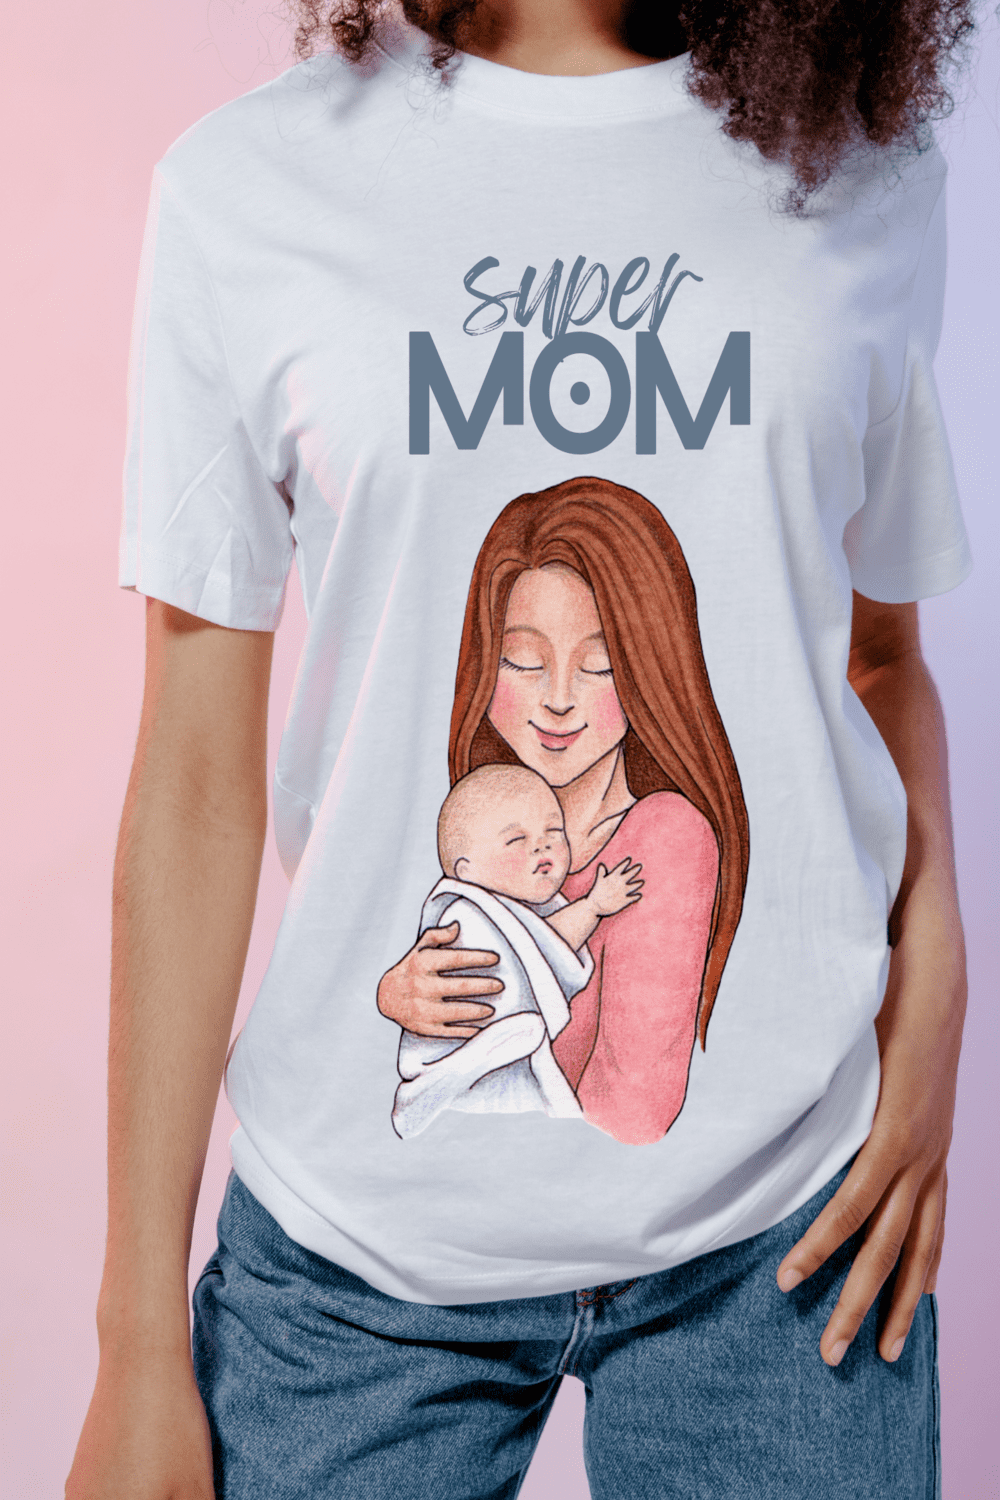 Super Mom T-shirt - pinterest image preview.